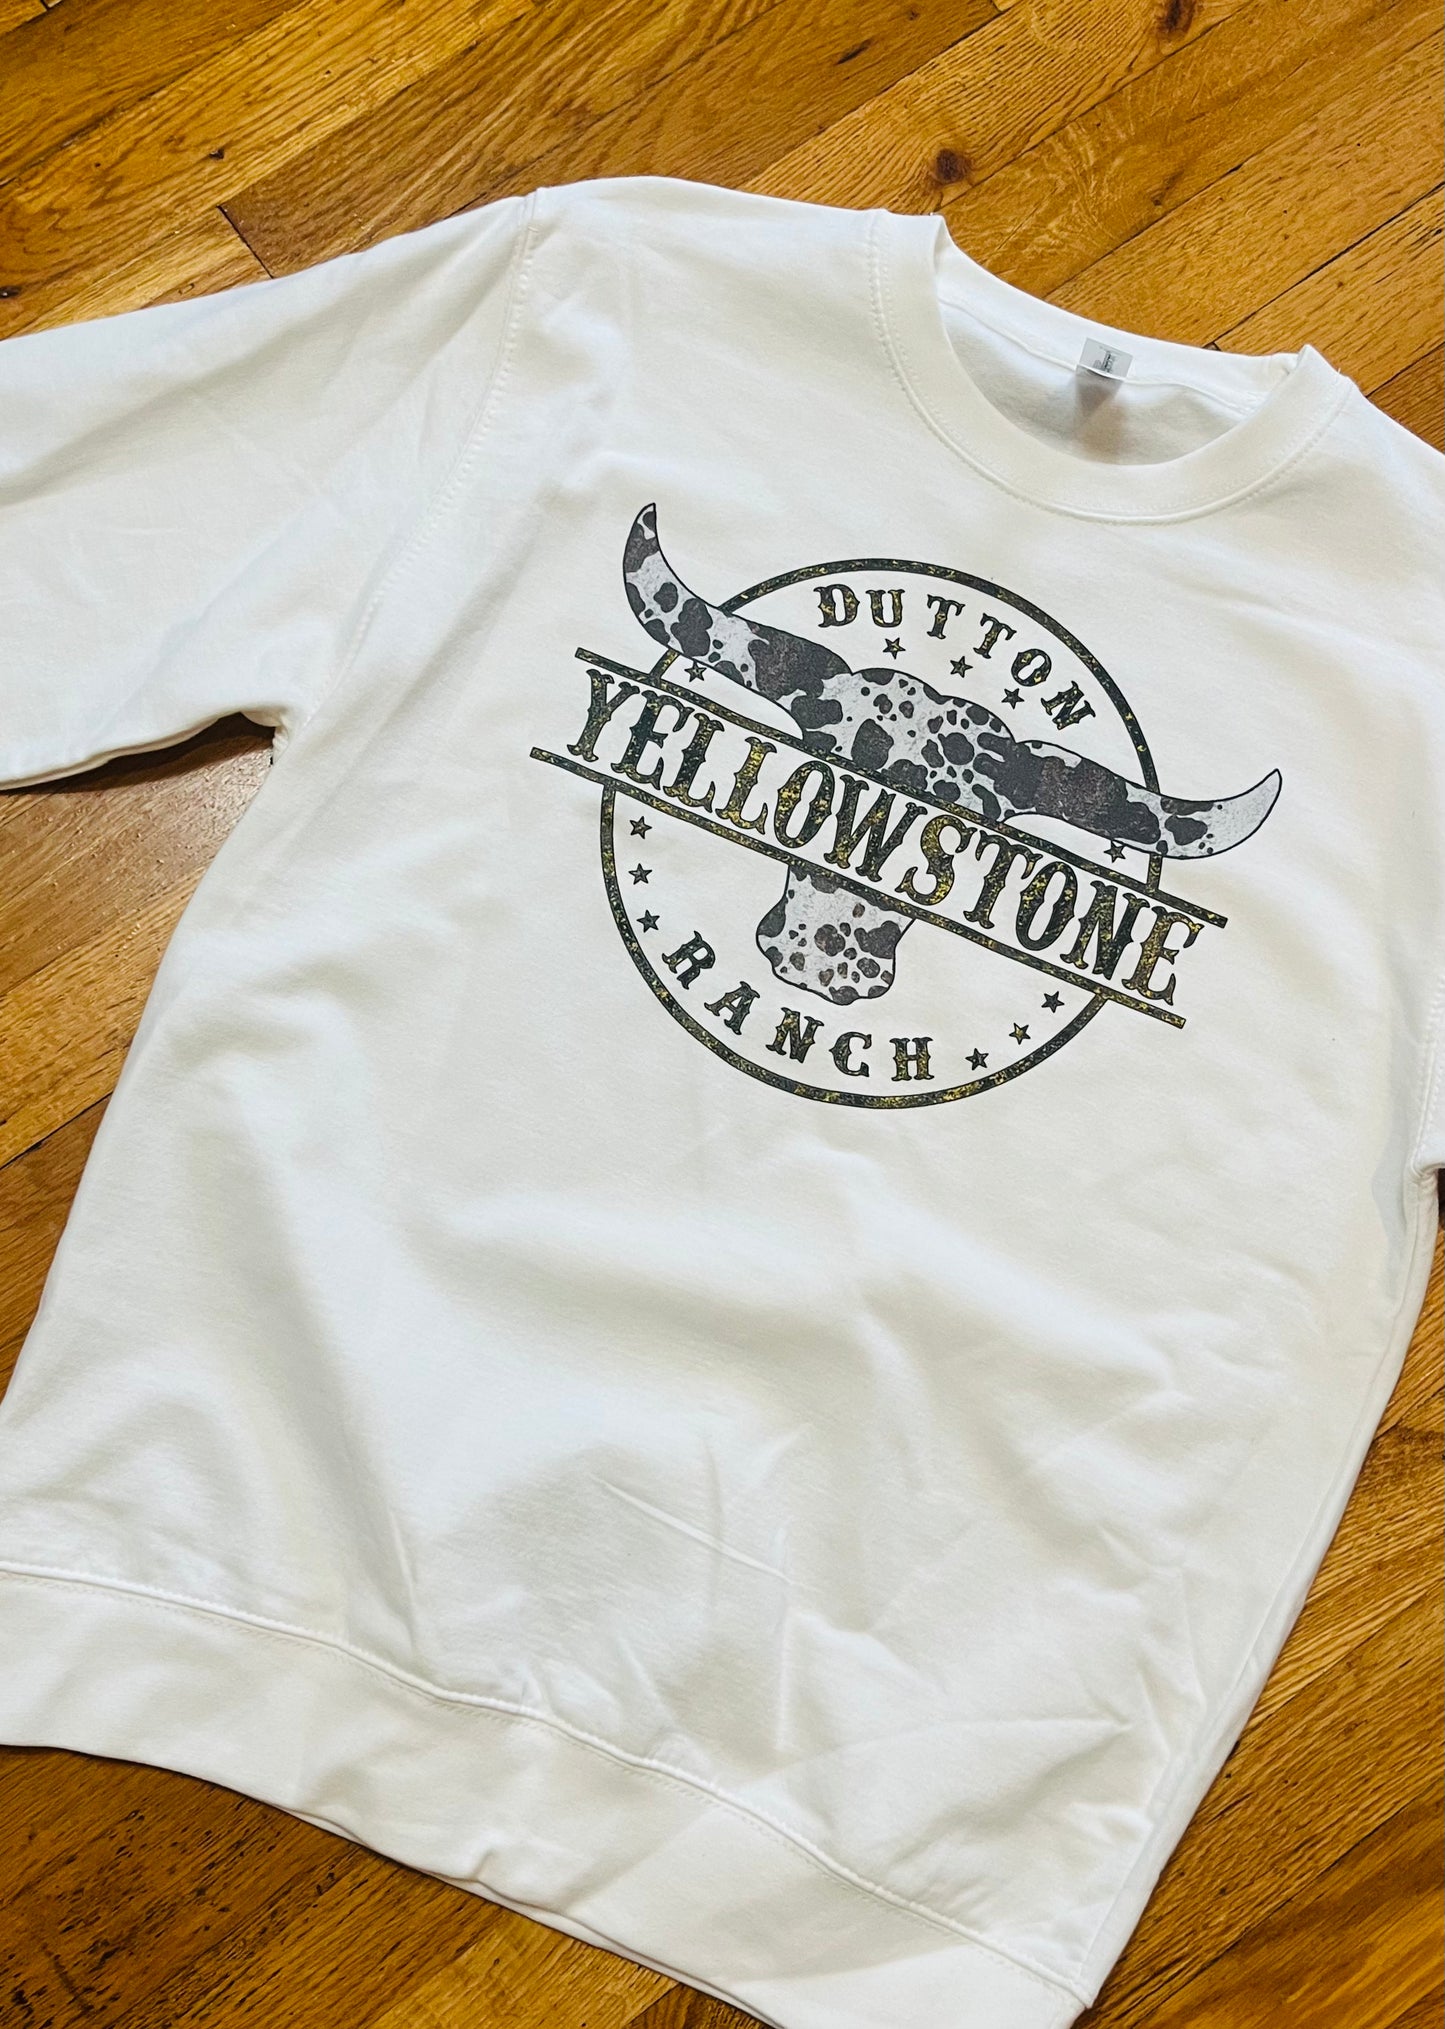 Yellowstone sweatshirt